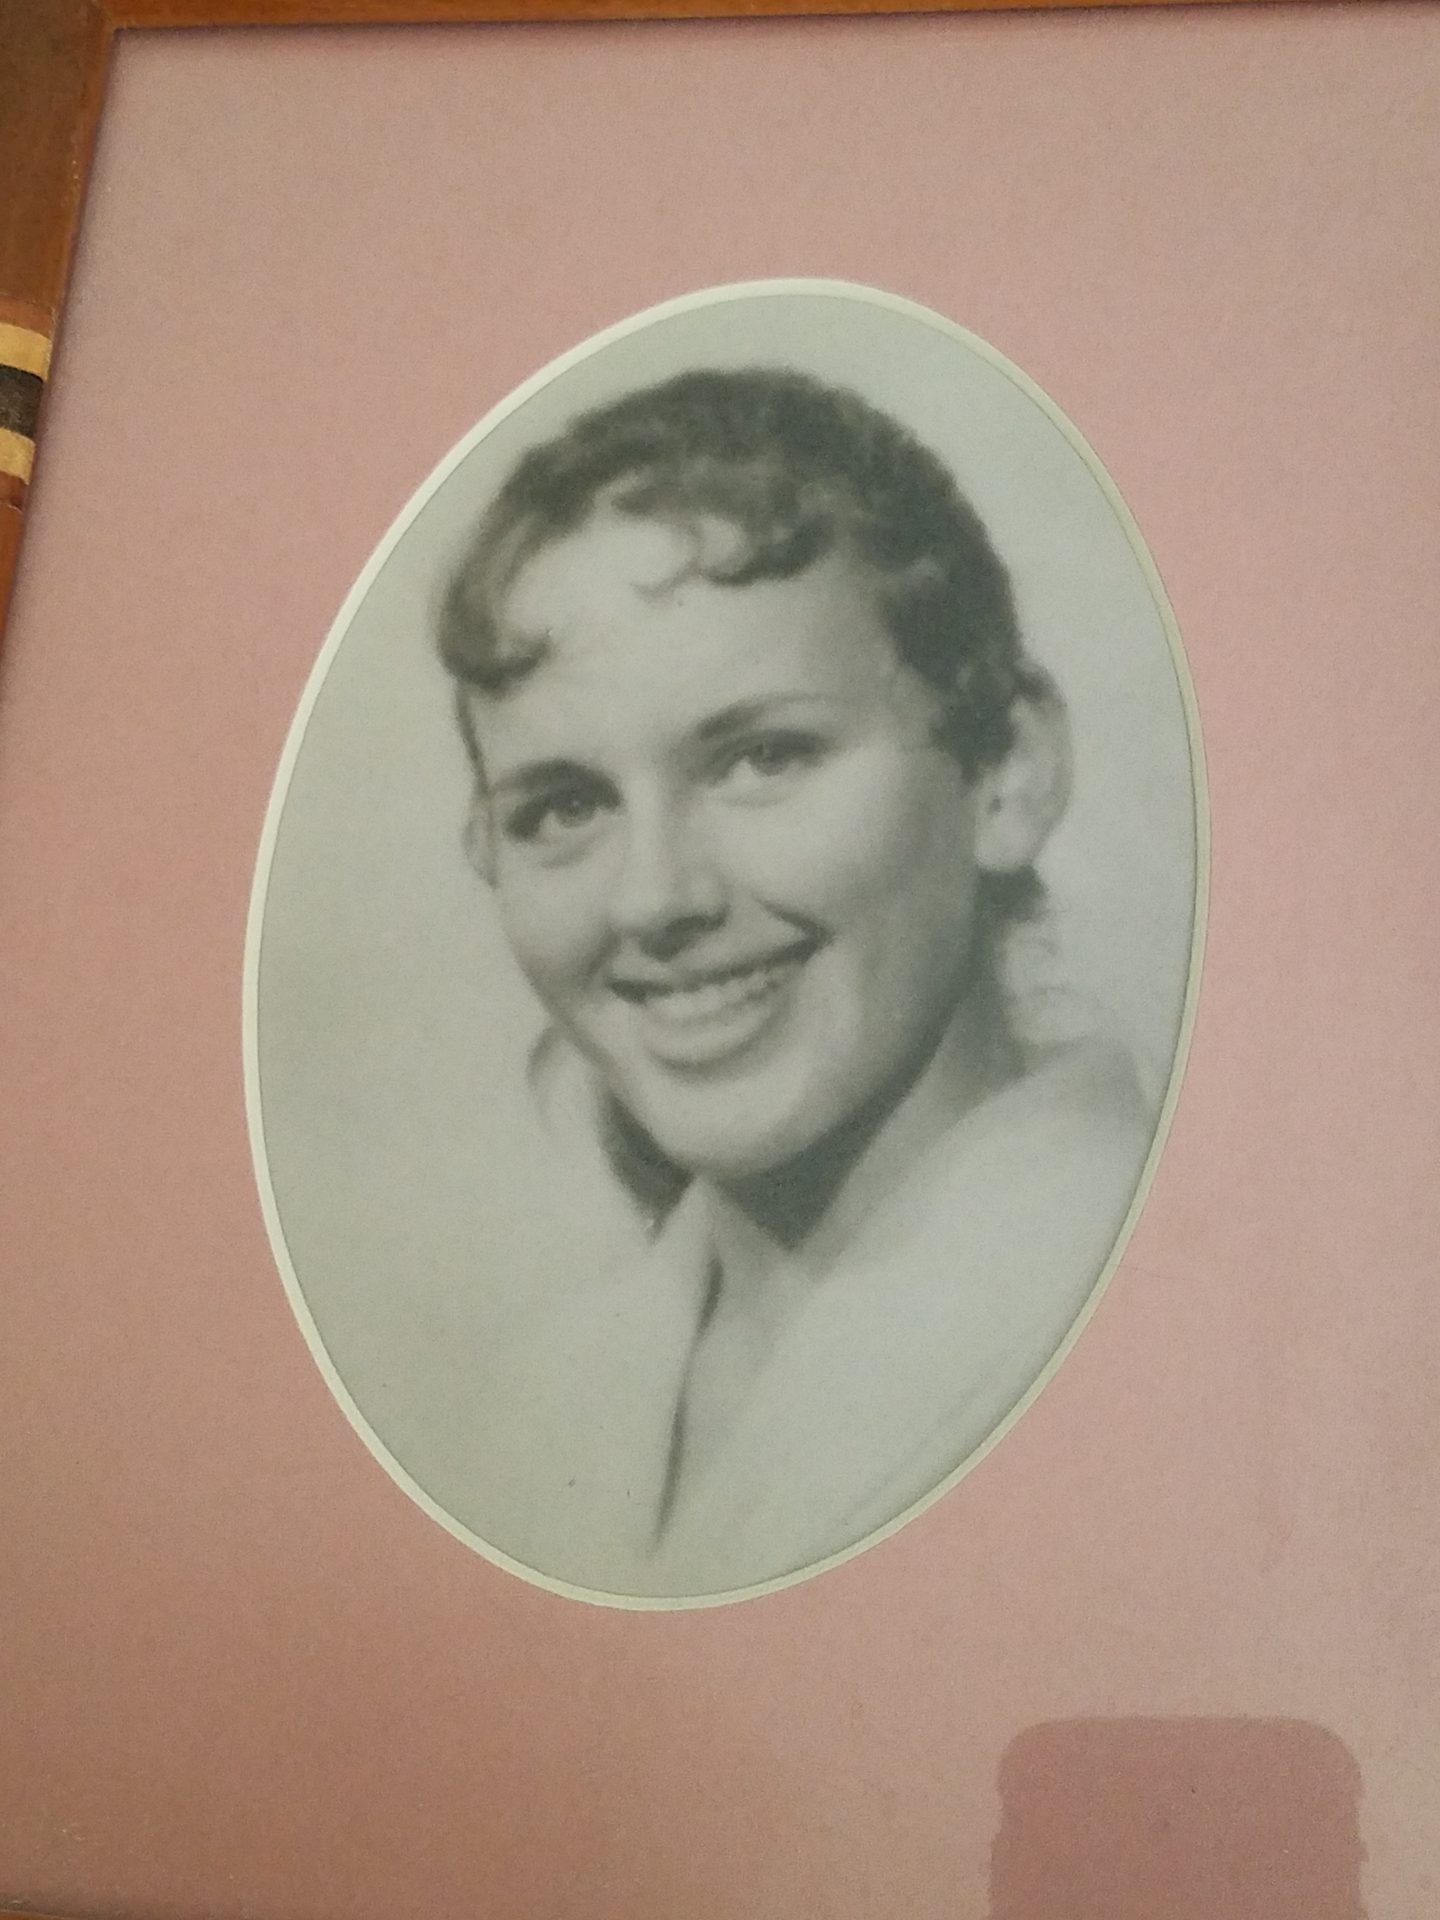 Mom in HS, circa 1962